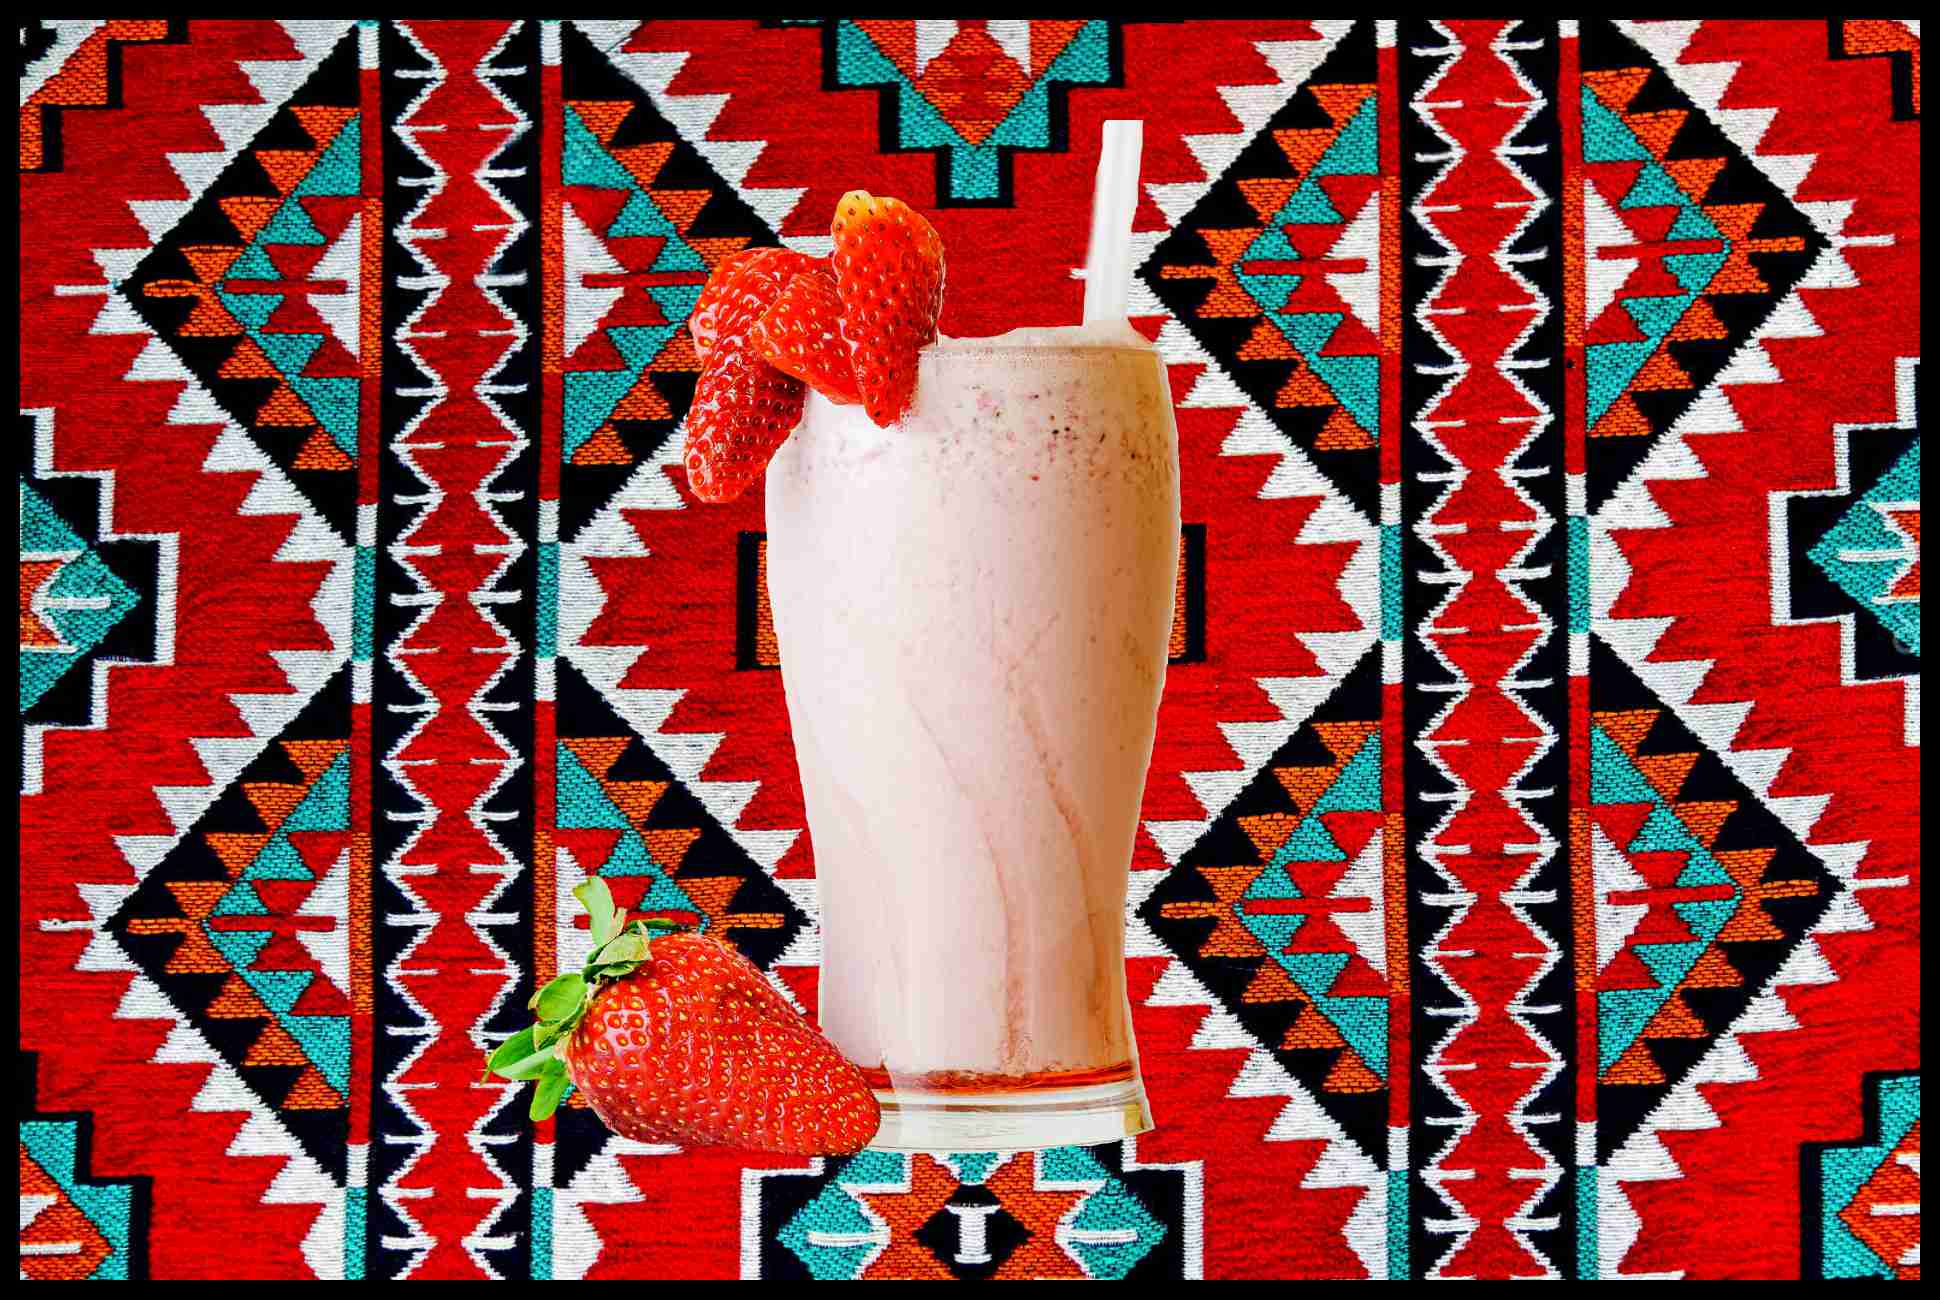 Strawberry & Milk Shake; Indulgent treat; Petra beverages; My Mom's Recipe; Petra cafe drinks; My Mom's Kitchen drinks; Petra drink menu; Creamy strawberry shake; Refreshing milkshake; Strawberry delight; Petra shake options; My Mom's Recipe strawberry milkshake; Petra cafe beverages; Petra's finest drinks; Creamy strawberry goodness; Luscious shake blend; Petra's authentic strawberry shake; Strawberry & milk perfection; Heavenly milkshake; Strawberry & Milk Shake at My Mom's Recipe